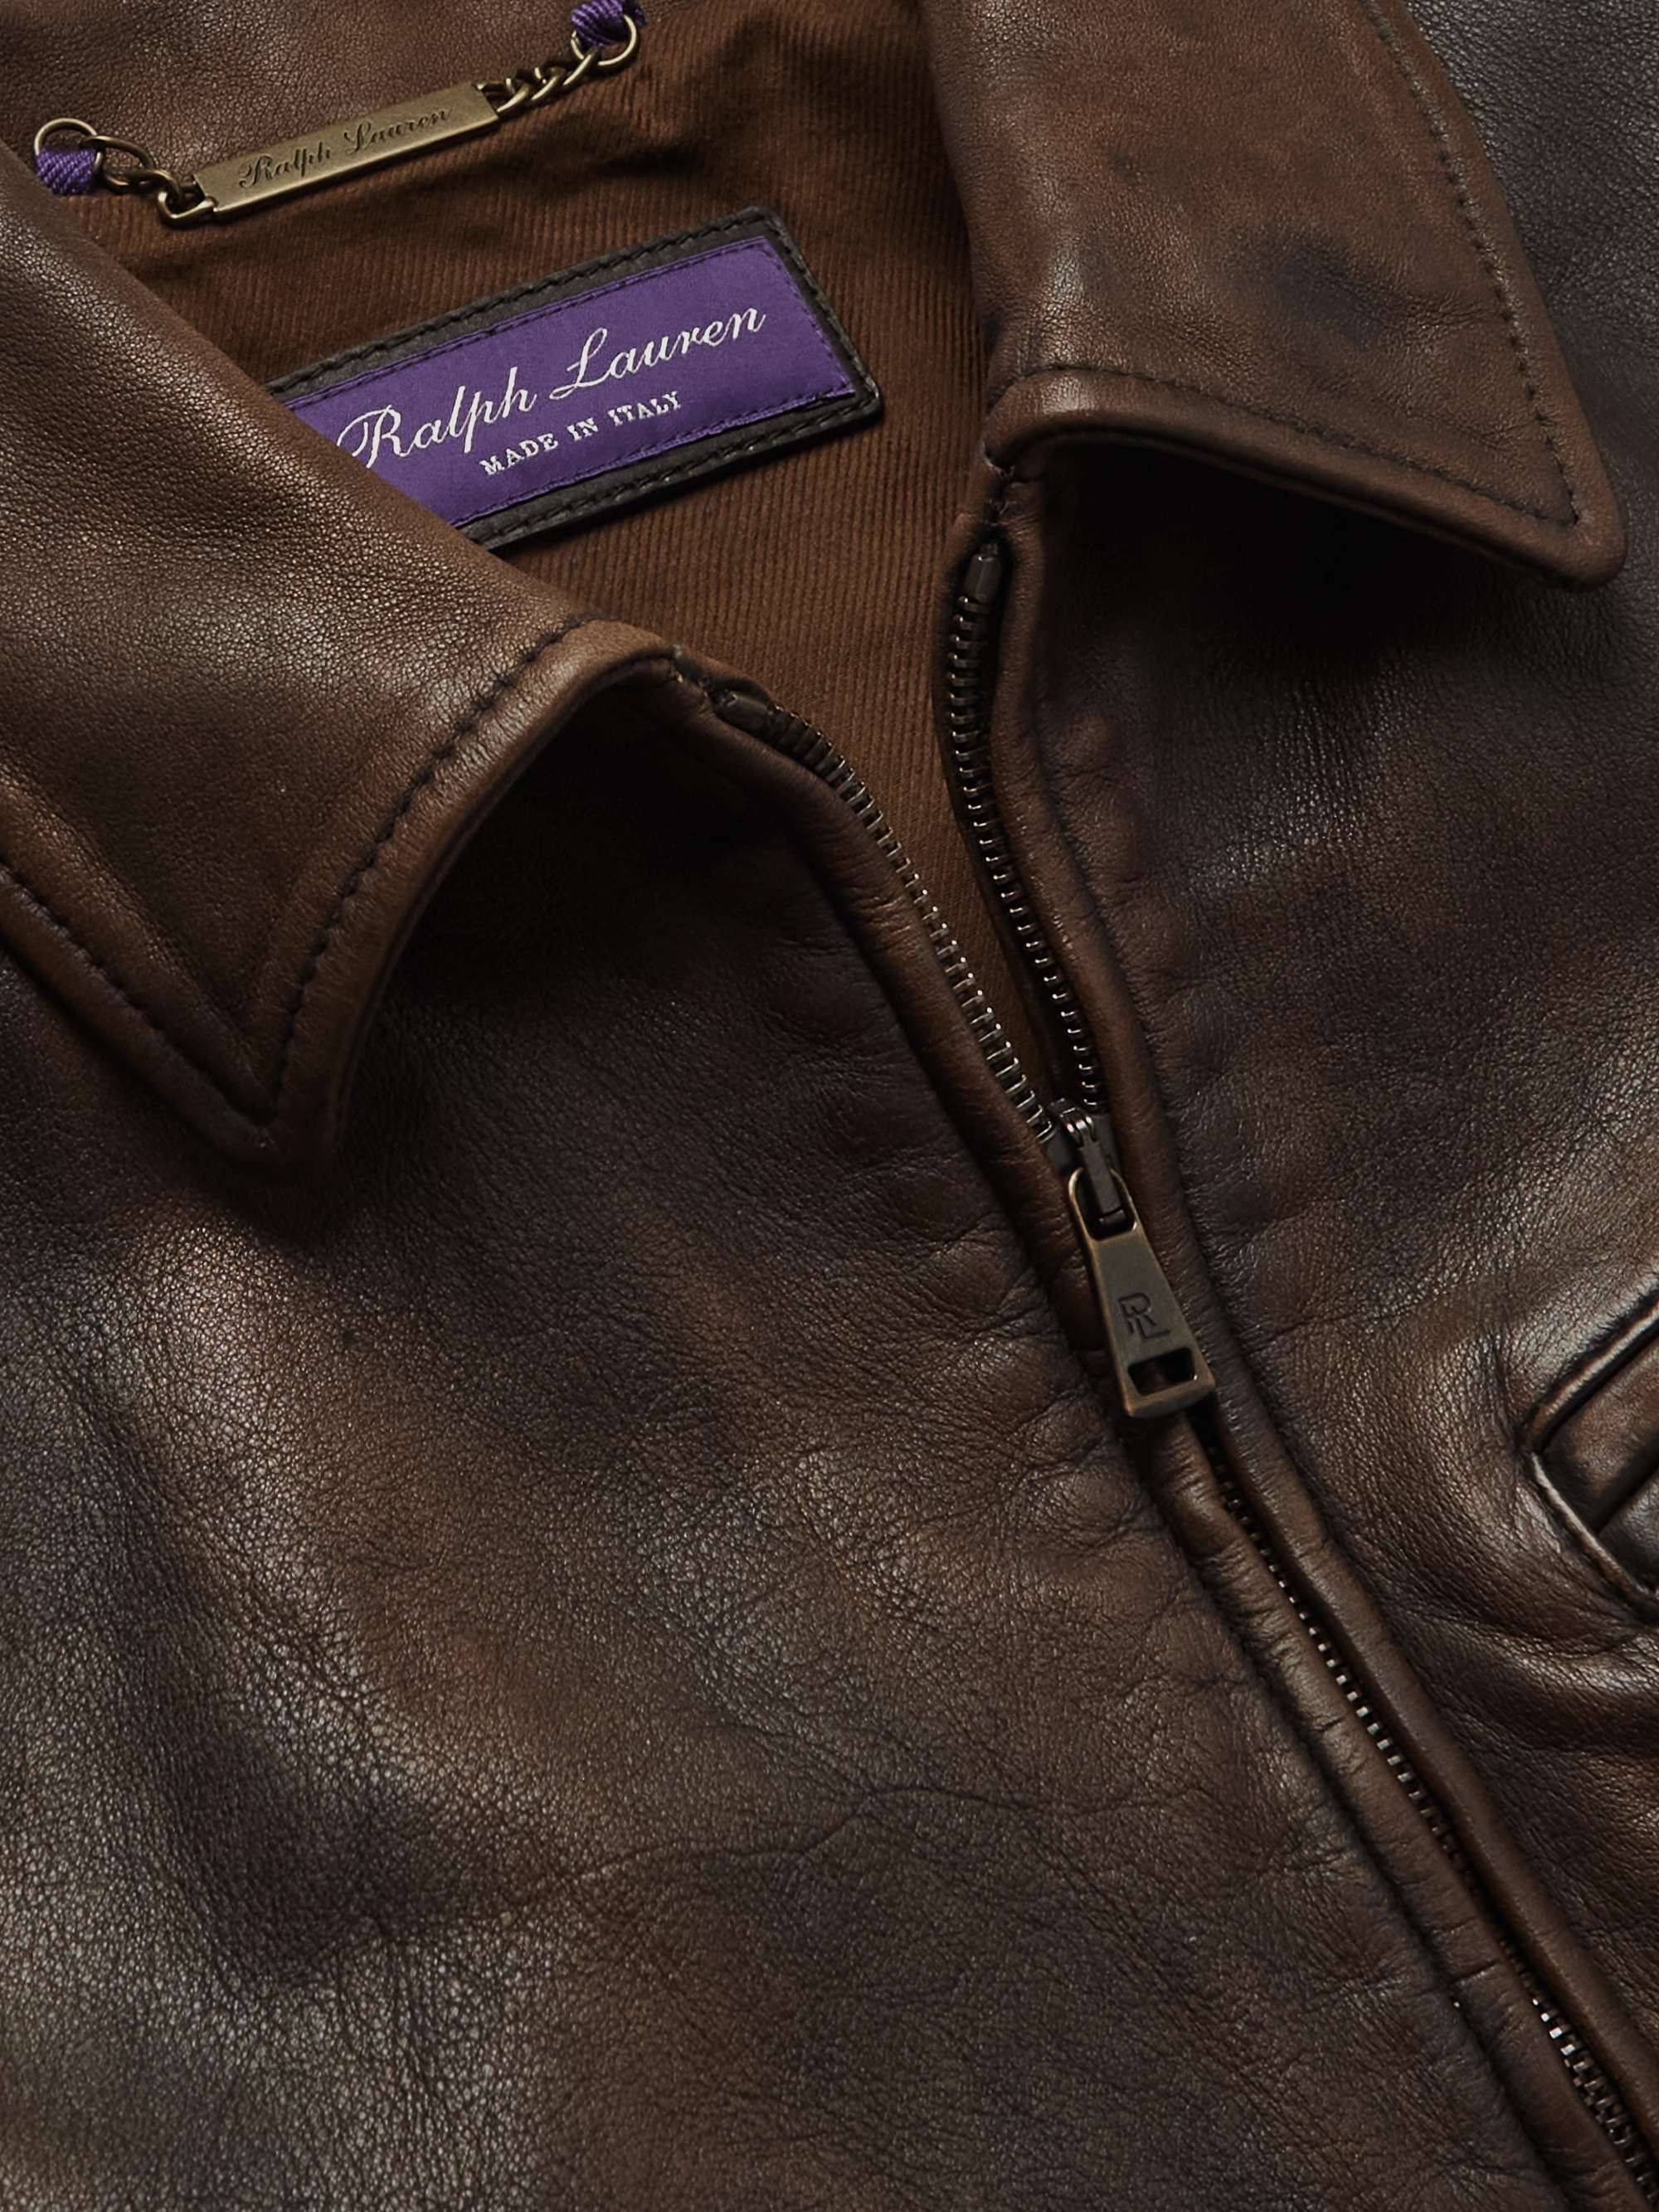 RALPH LAUREN PURPLE LABEL Hugh Leather Jacket